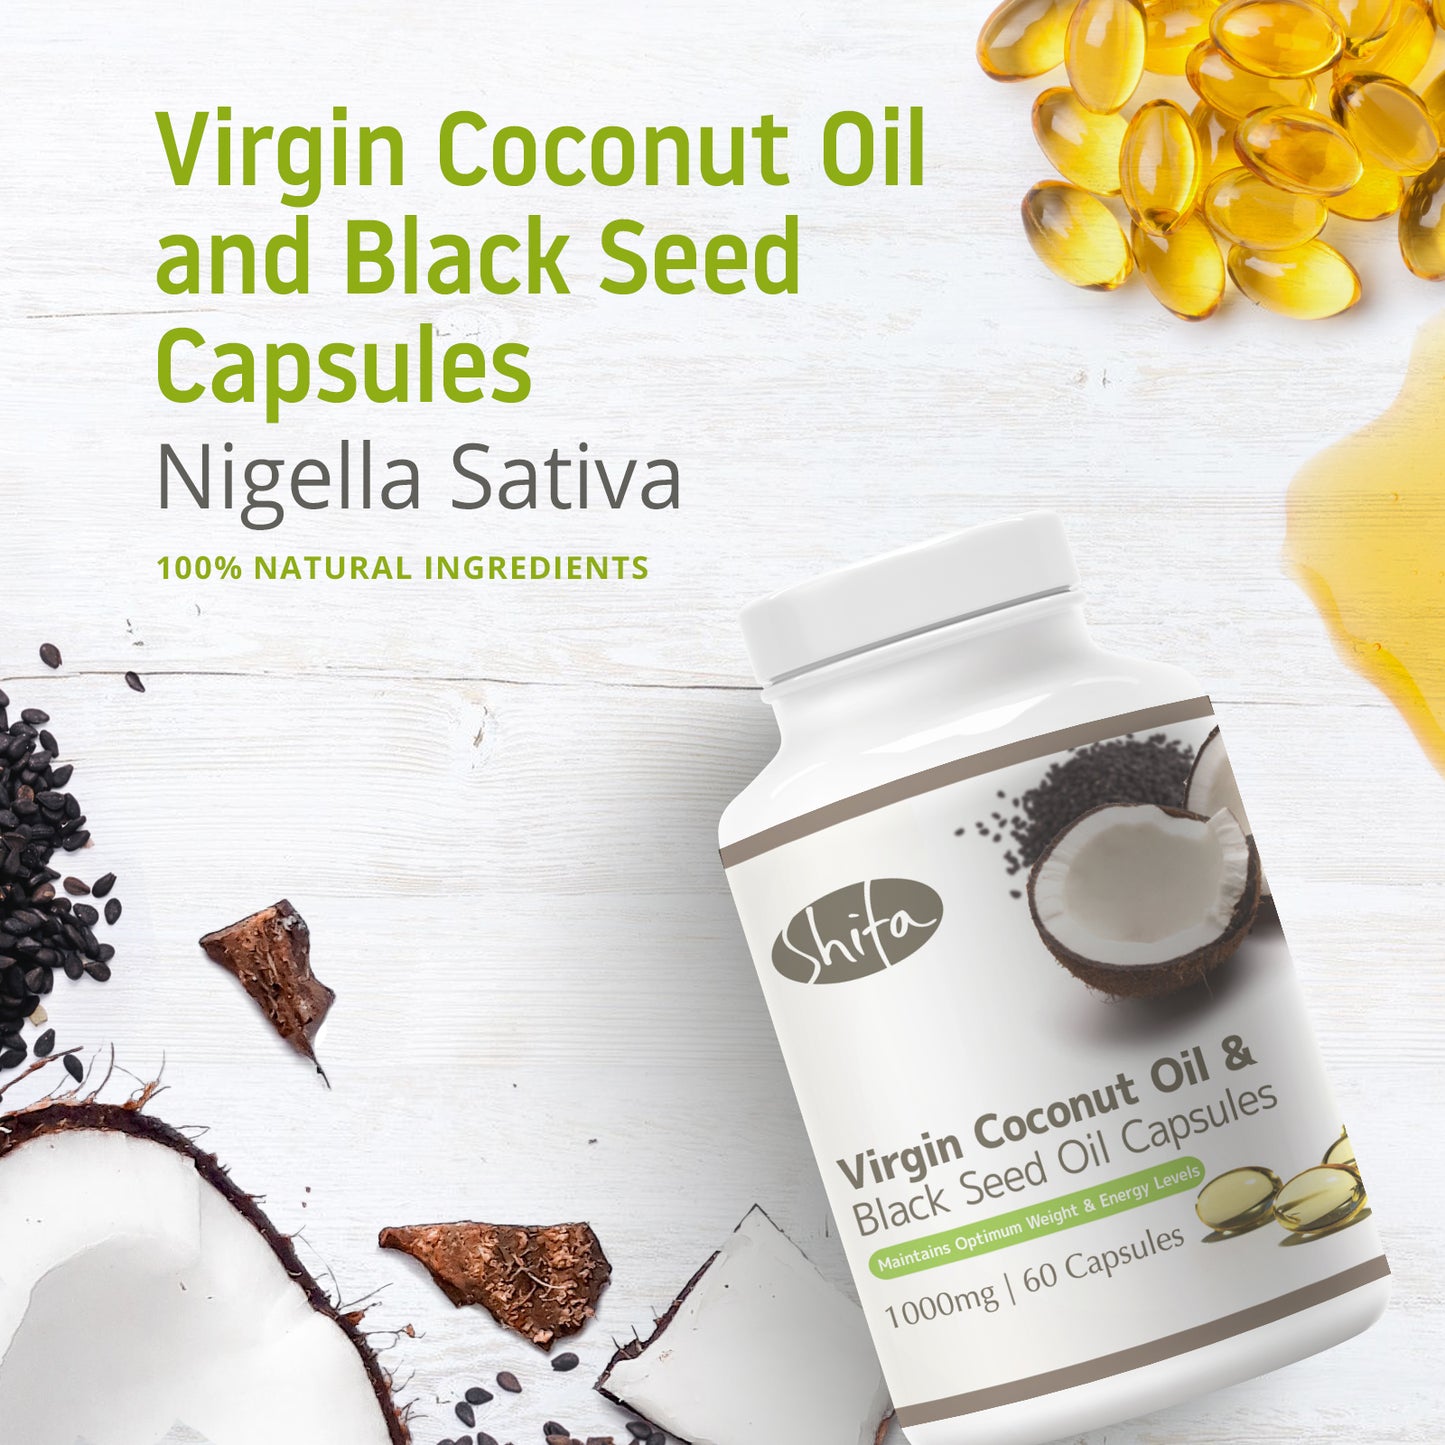 Virgin Coconut Oil & Black Seed Oil Capsules (1000mg | 60 Caps)